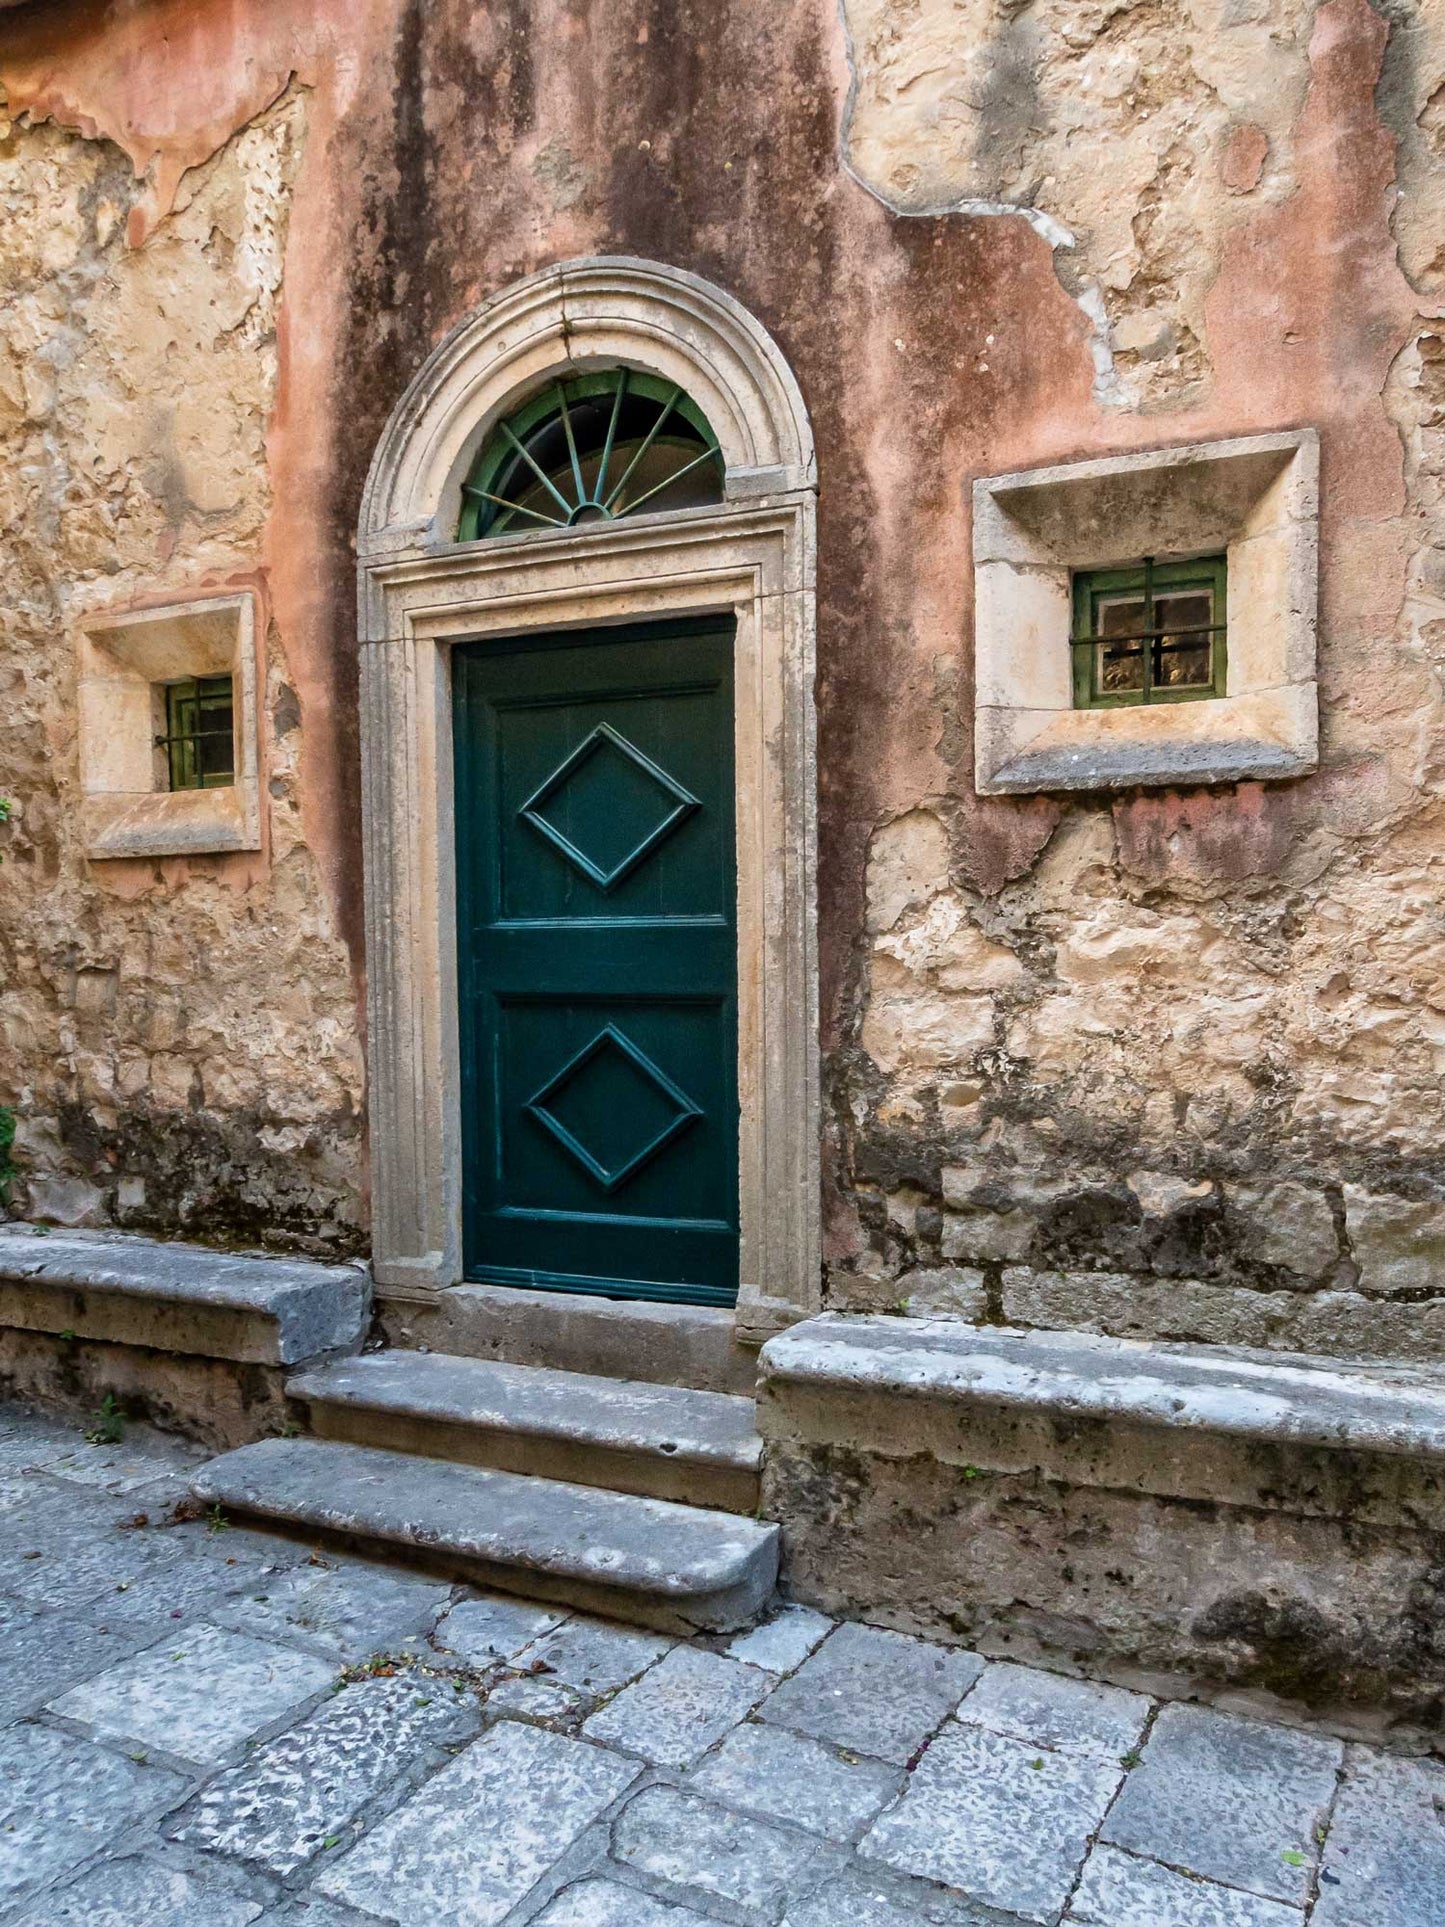 The Green Door, Korcula, Croatia 2014